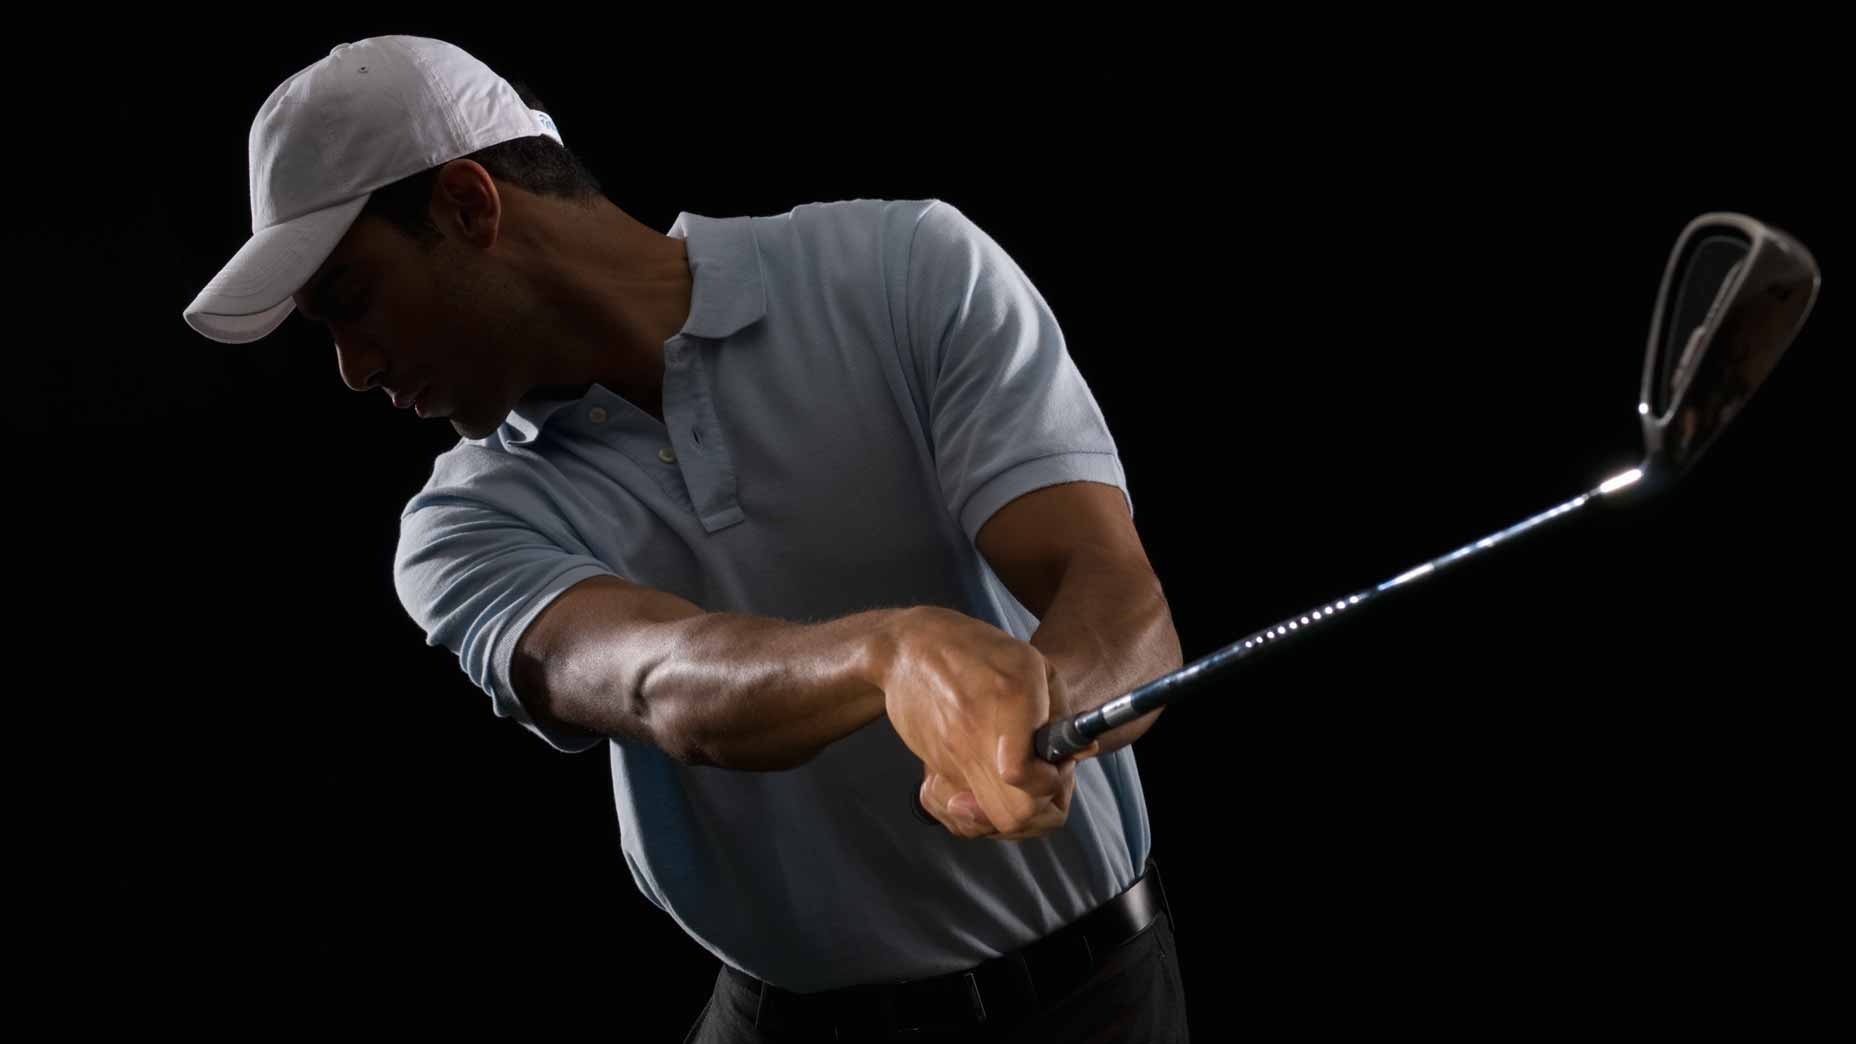 As golf season approaches, Scottie Scheffler's trainer, Dr. Troy Van Biezen, shares his tips on priming your muscles to perform your best